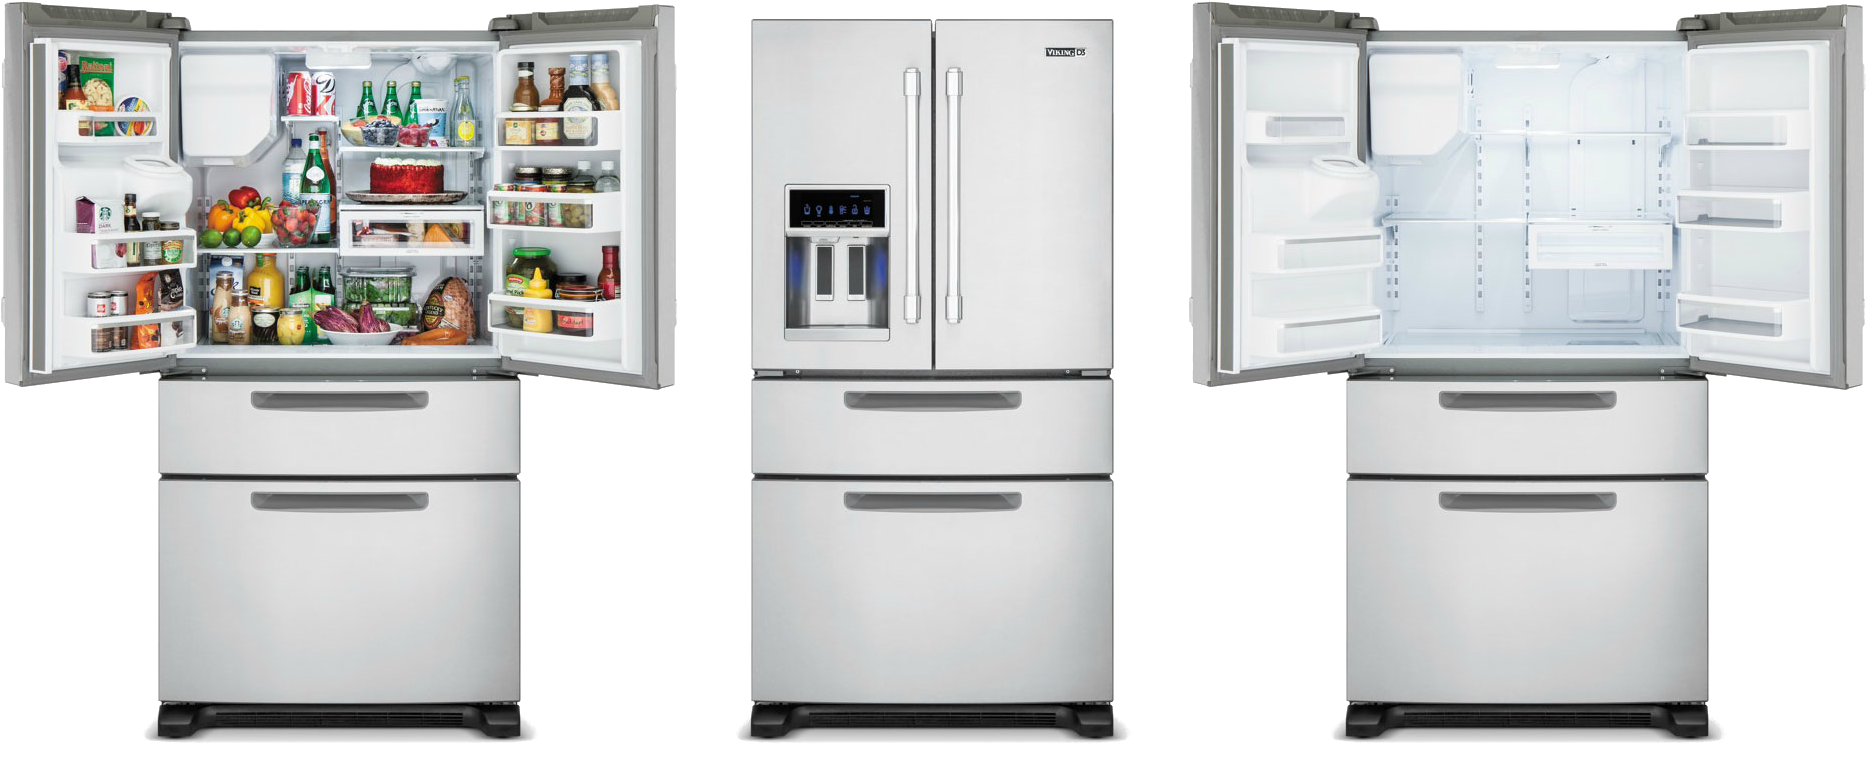 Refrigerator PNG Background Image